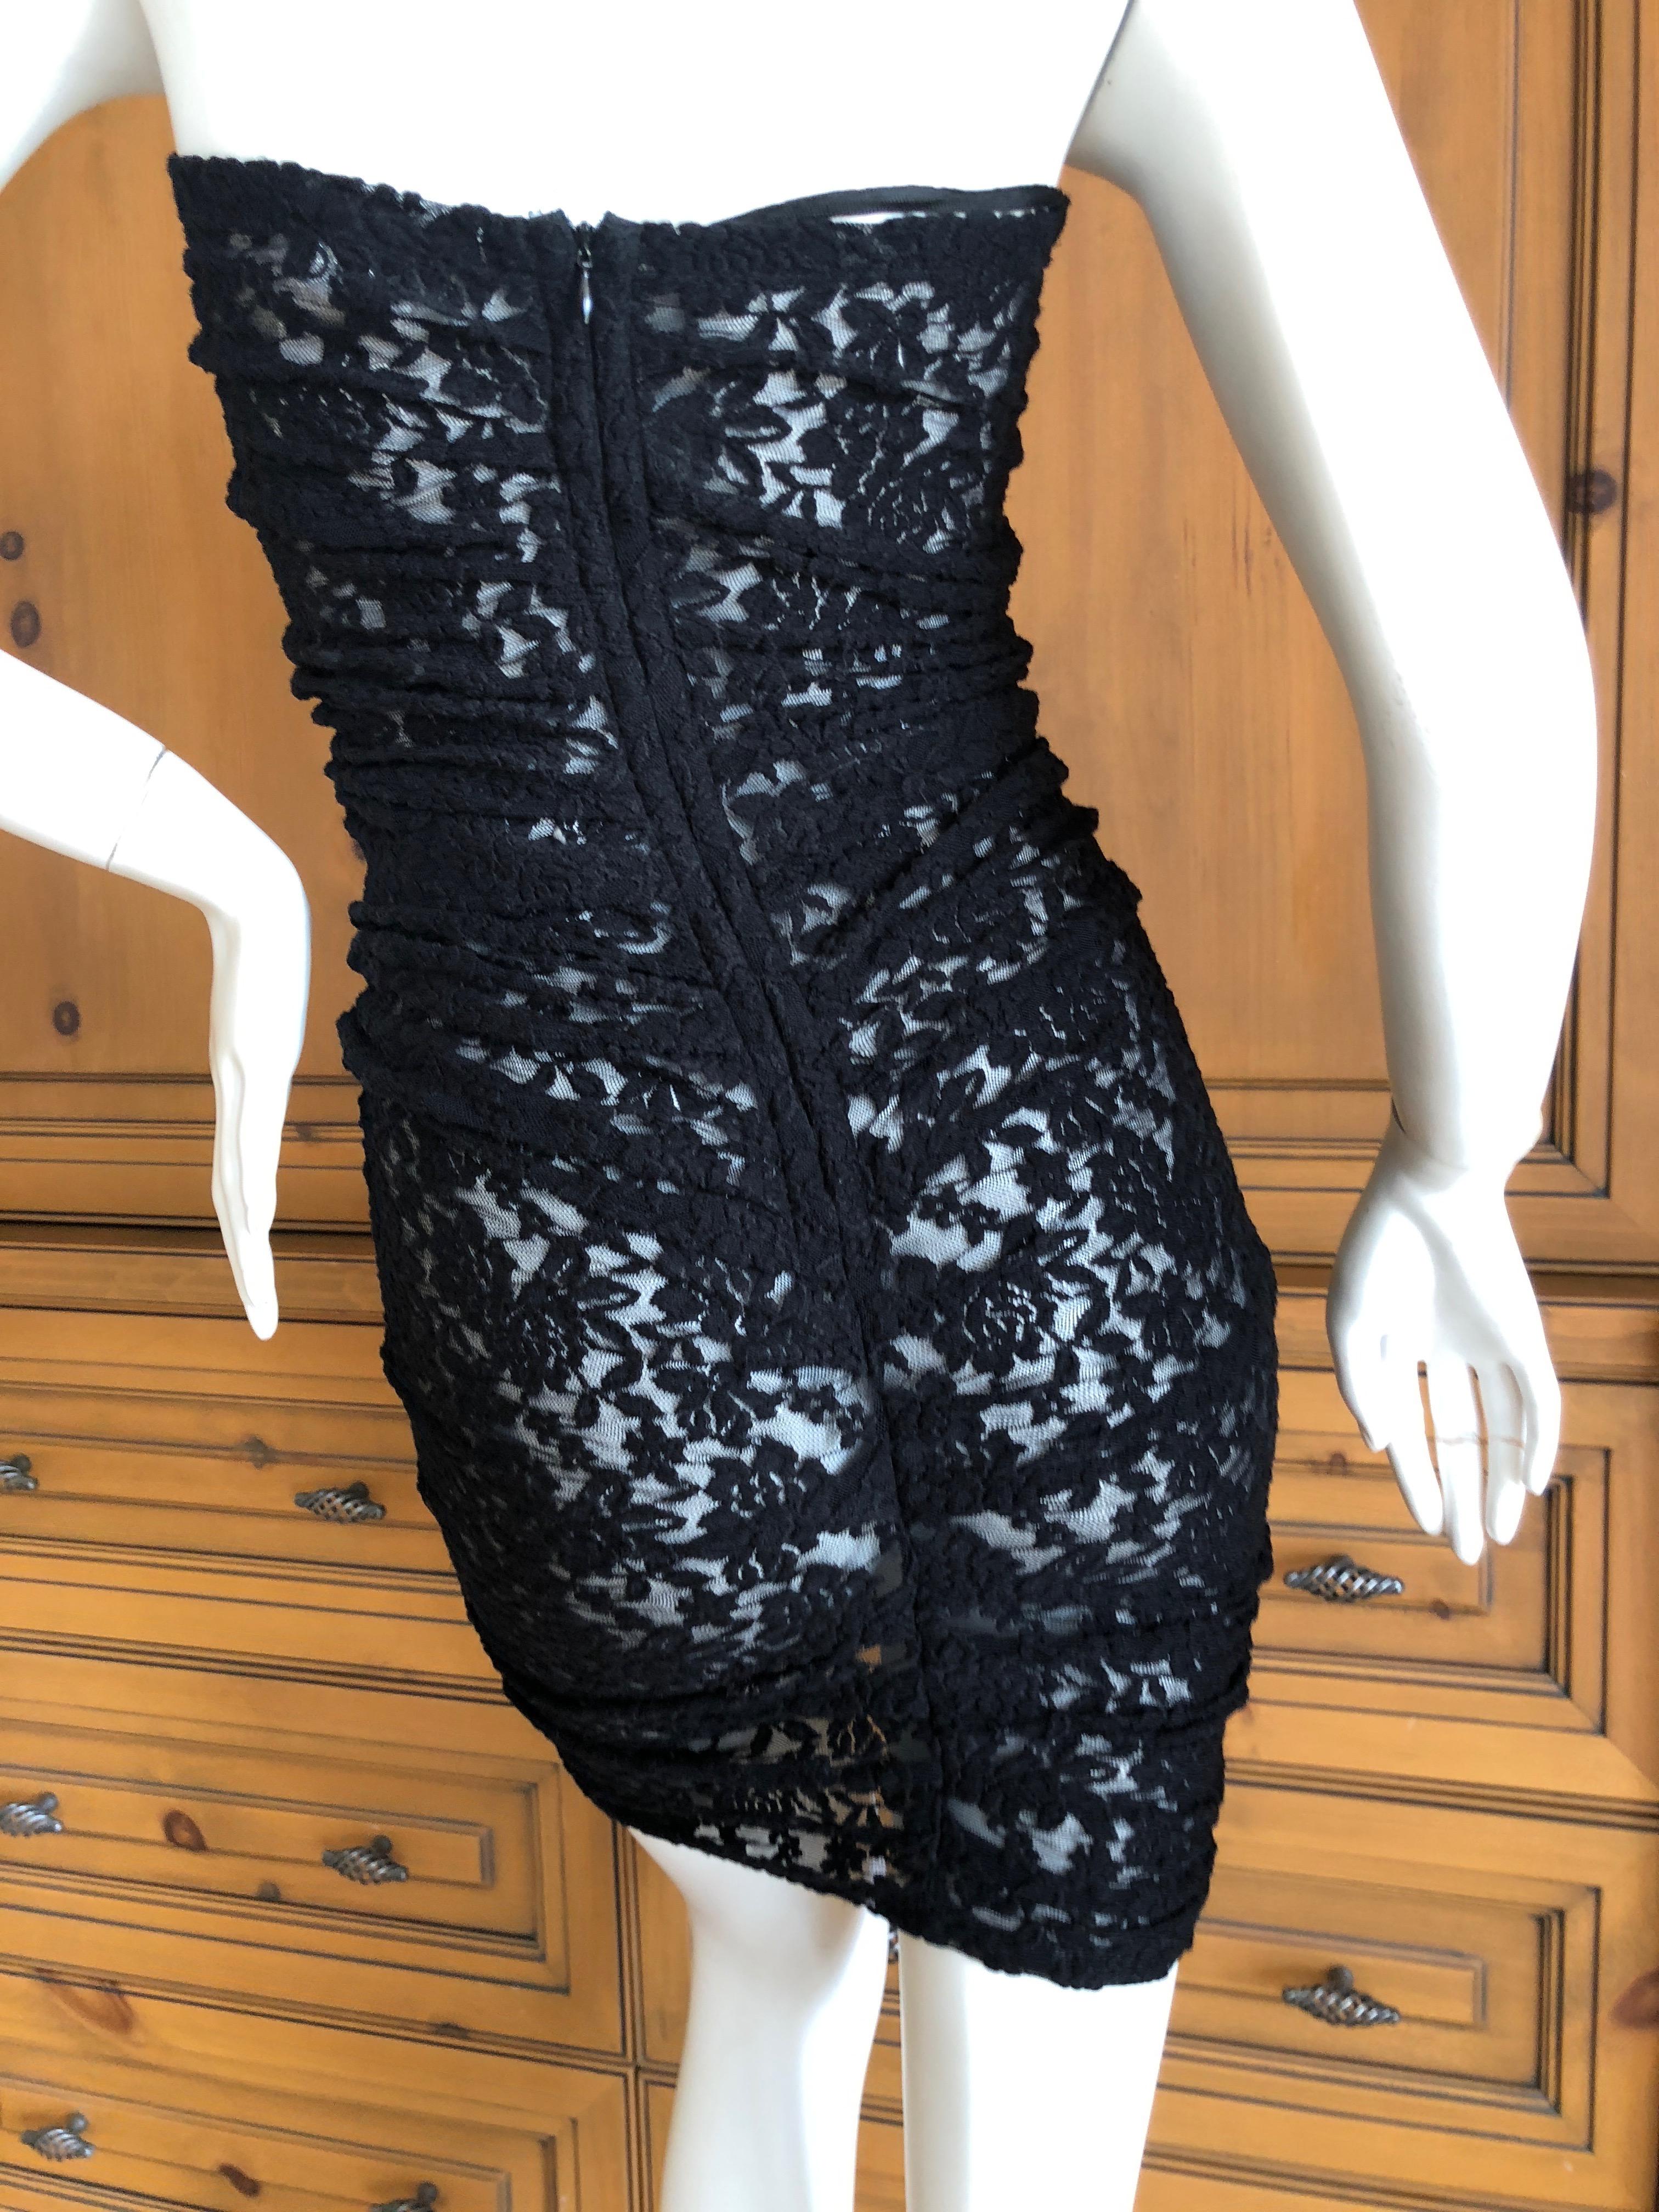 D&G Dolce & Gabbana Sheer Black Lace Strapless Cocktail Dress w Lace Up Details 3